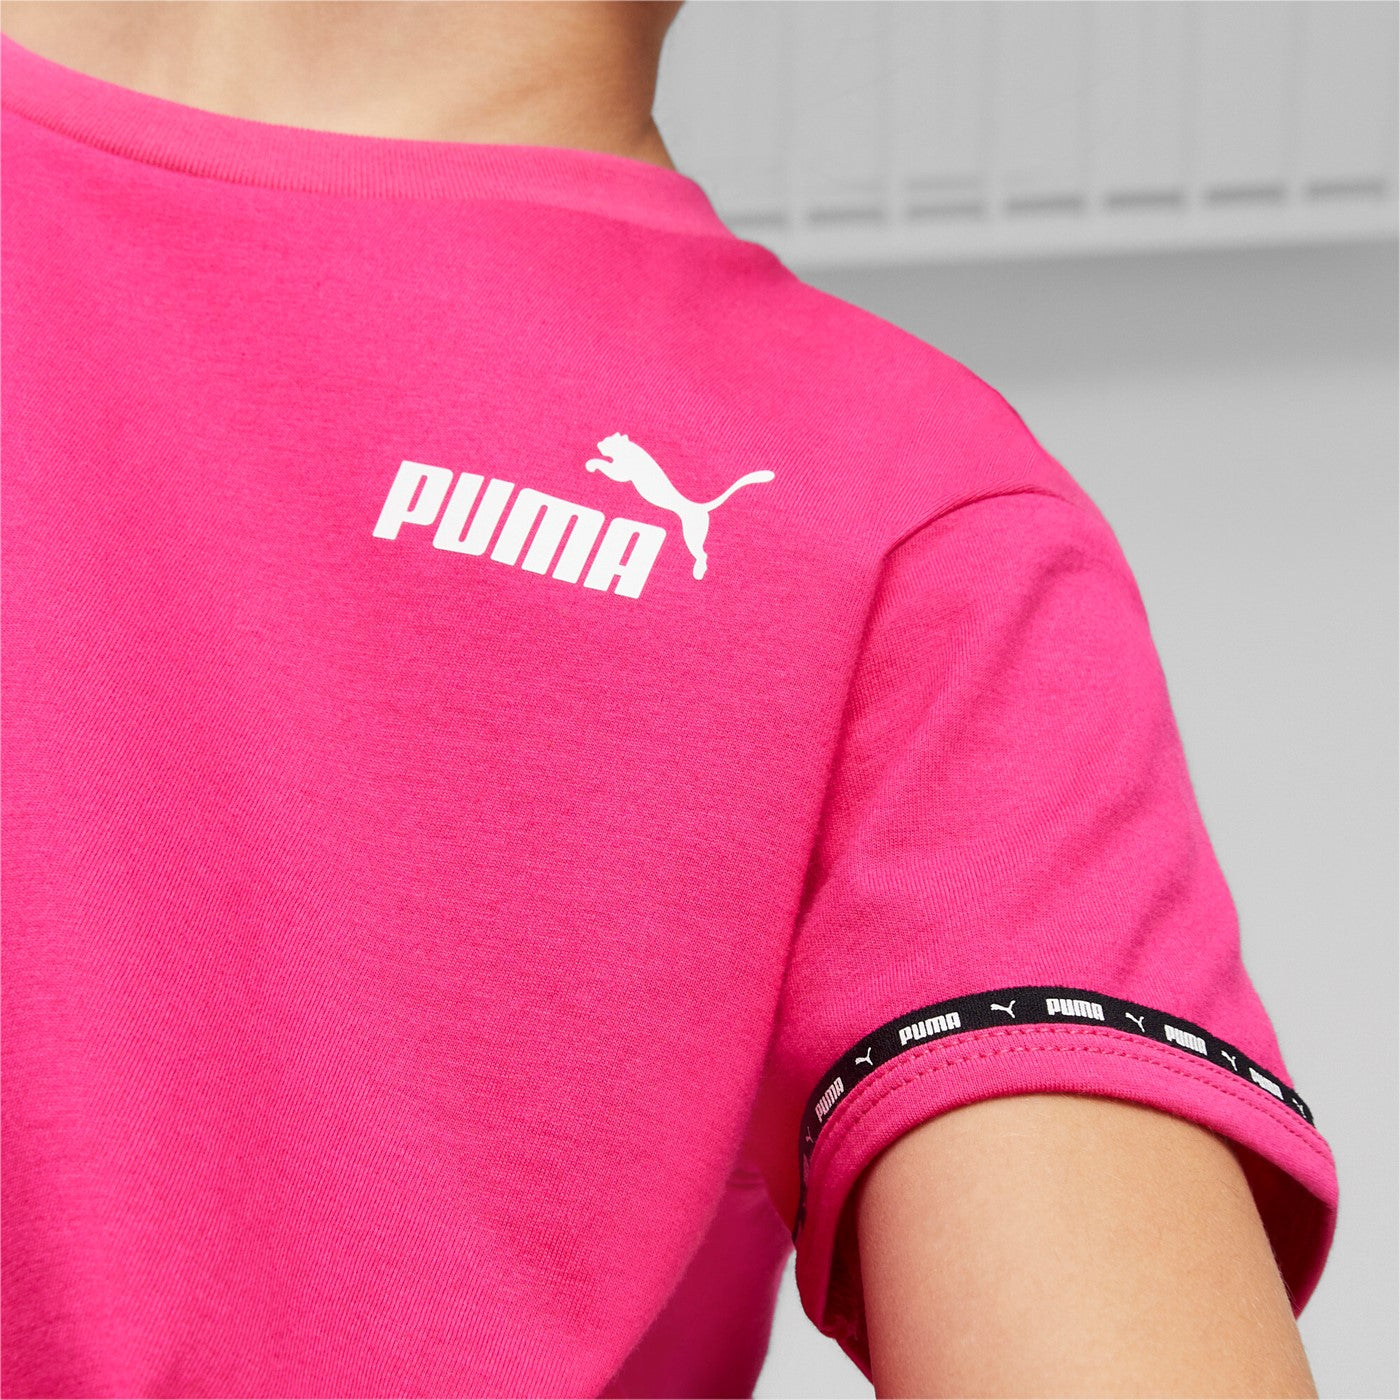 Puma T-shirt manica corta da ragazza Power Tape Tee 673544-64 orchid shadow